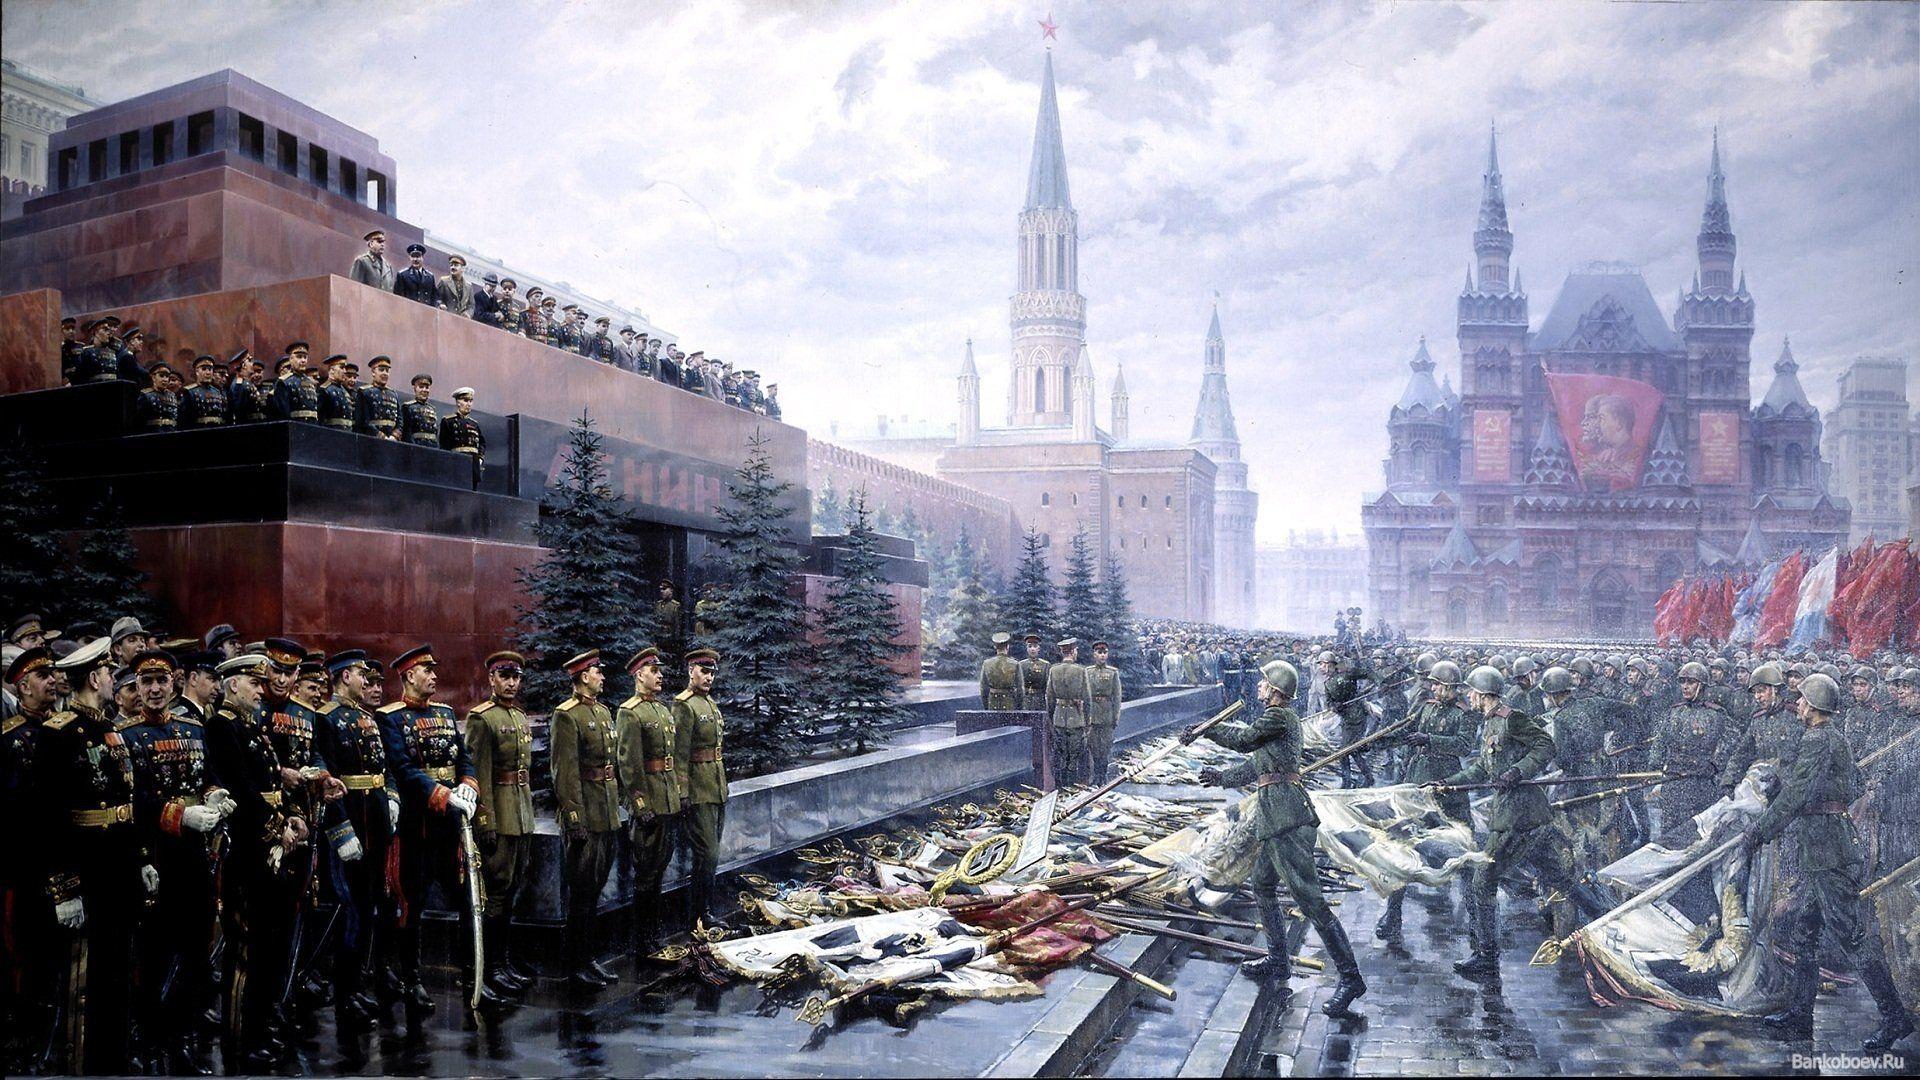 General 1920x1080 Russia Kremlin Joseph Stalin World War II military uniform Victory Day Red Square USSR